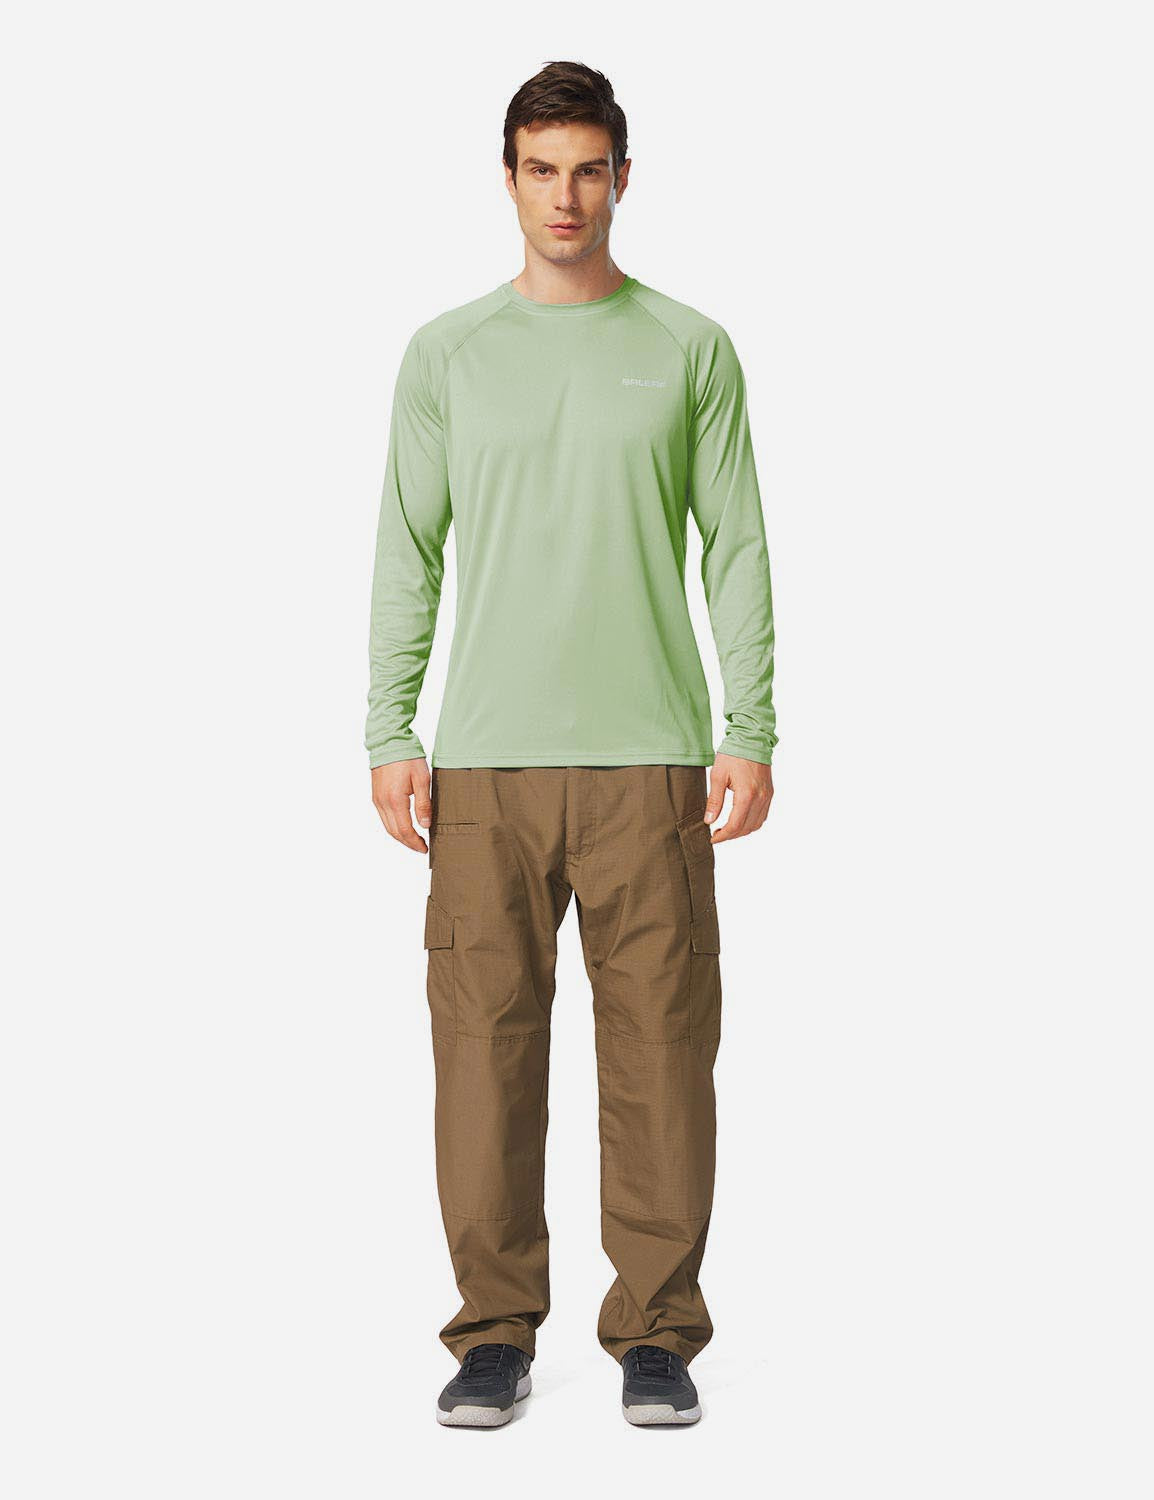 Baleaf Men's UPF50+ Long Sleeved Loose Fit Casual T-Shirt aga002 Pale Green Full